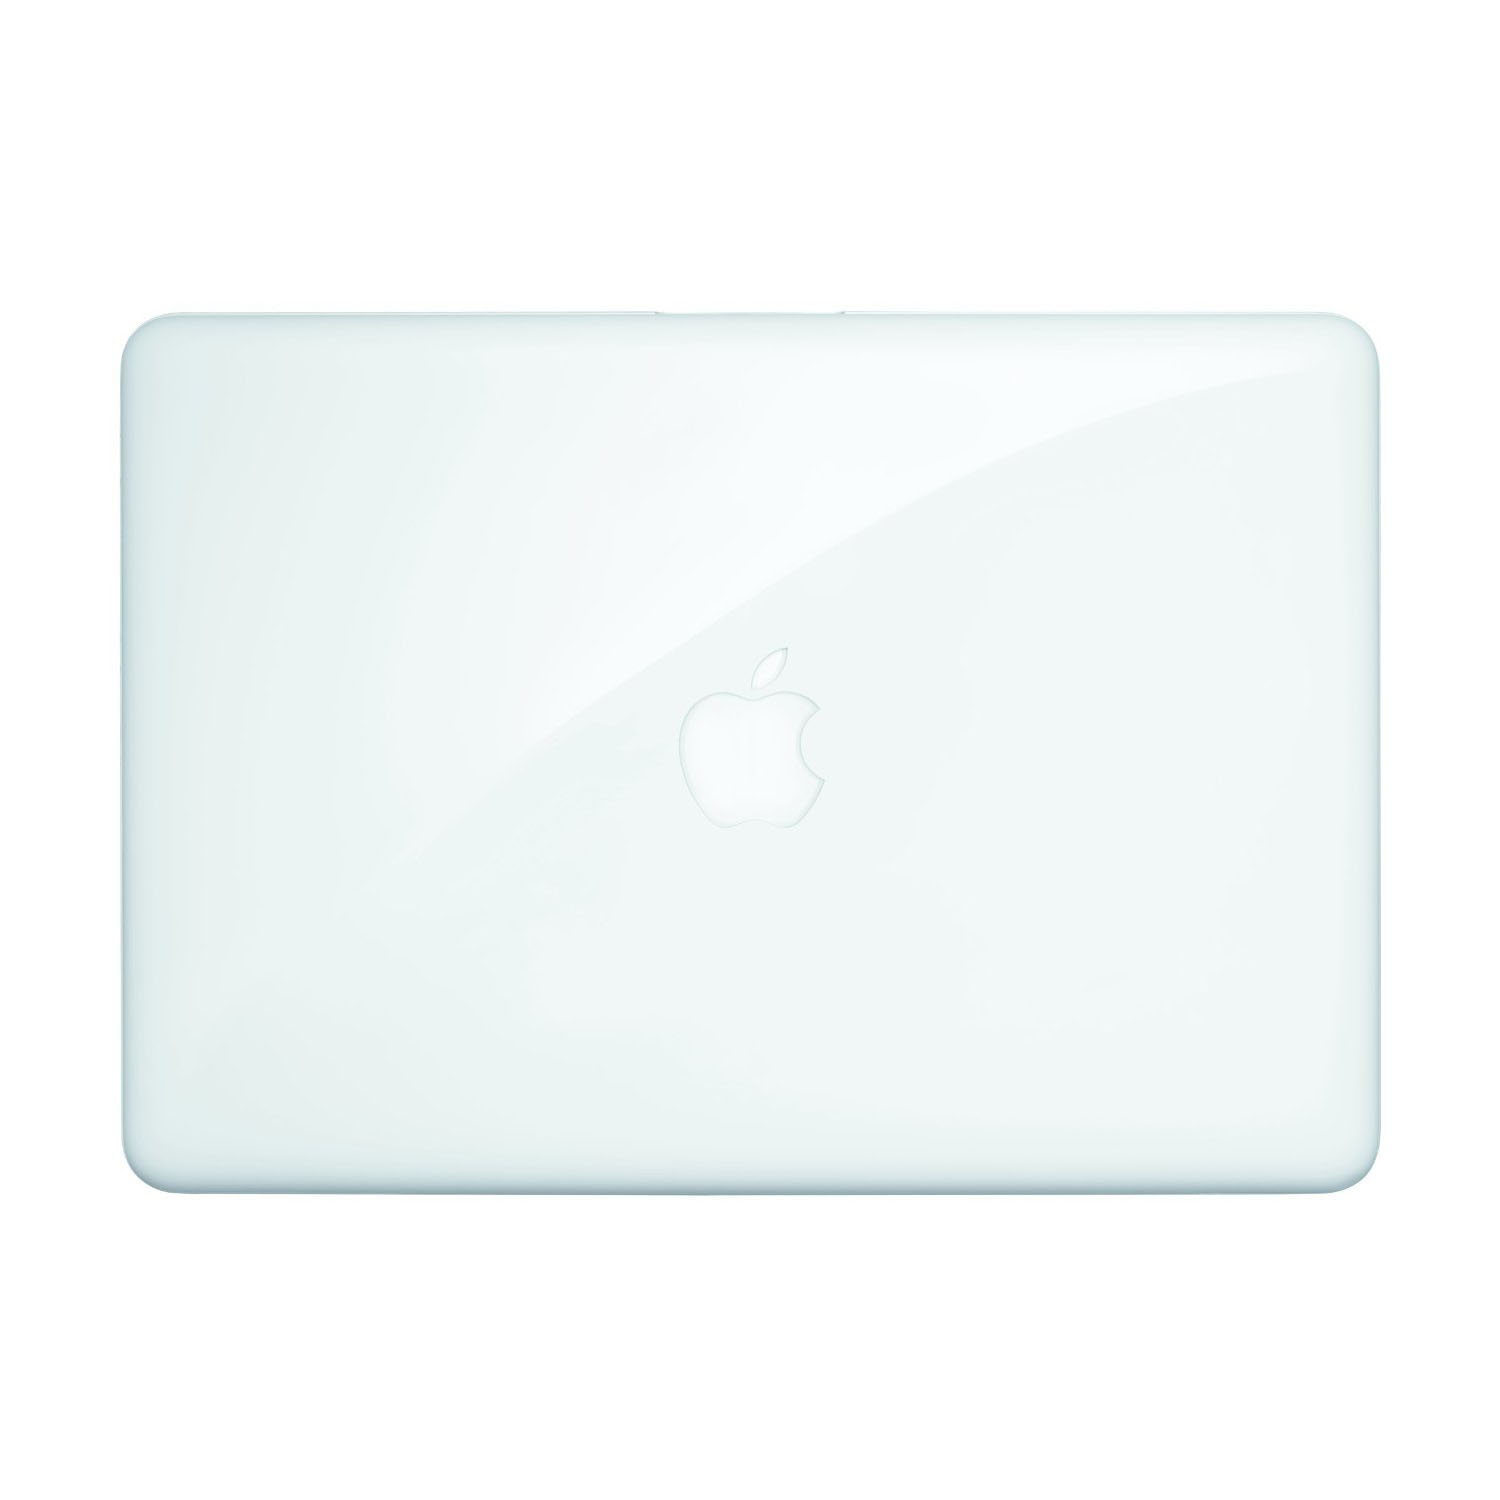 Apple MC207LLA 13.3" MacBook Core 2 Duo P7550 2.26GHz 250GB Notebook Laptop Refurbished